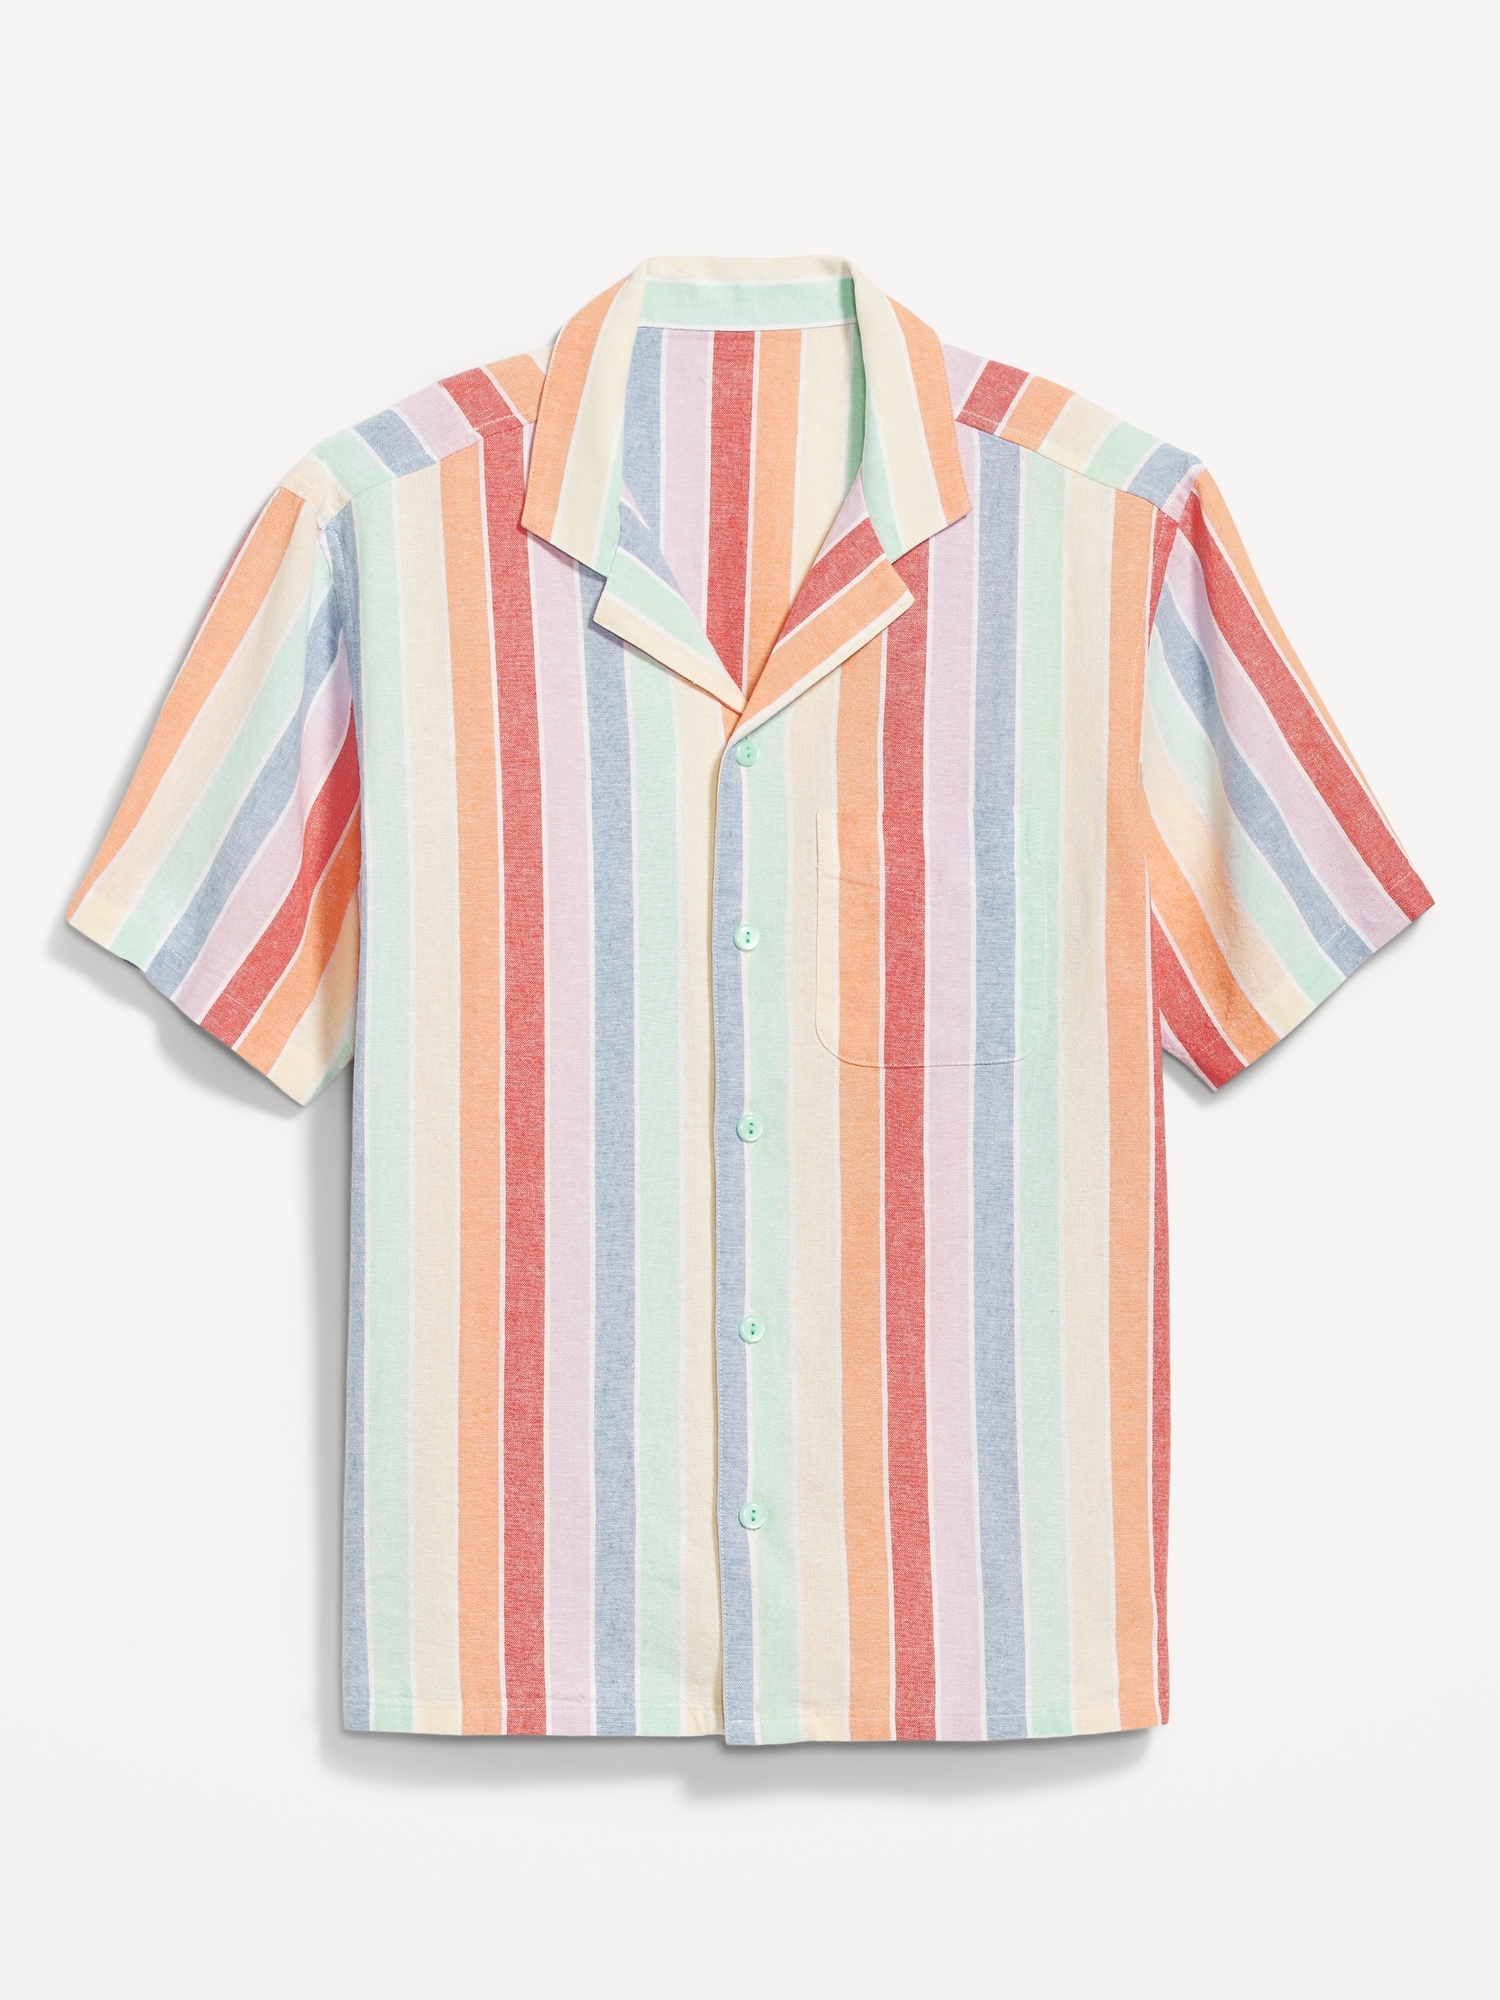 Men's Linen Shirts | Old Navy